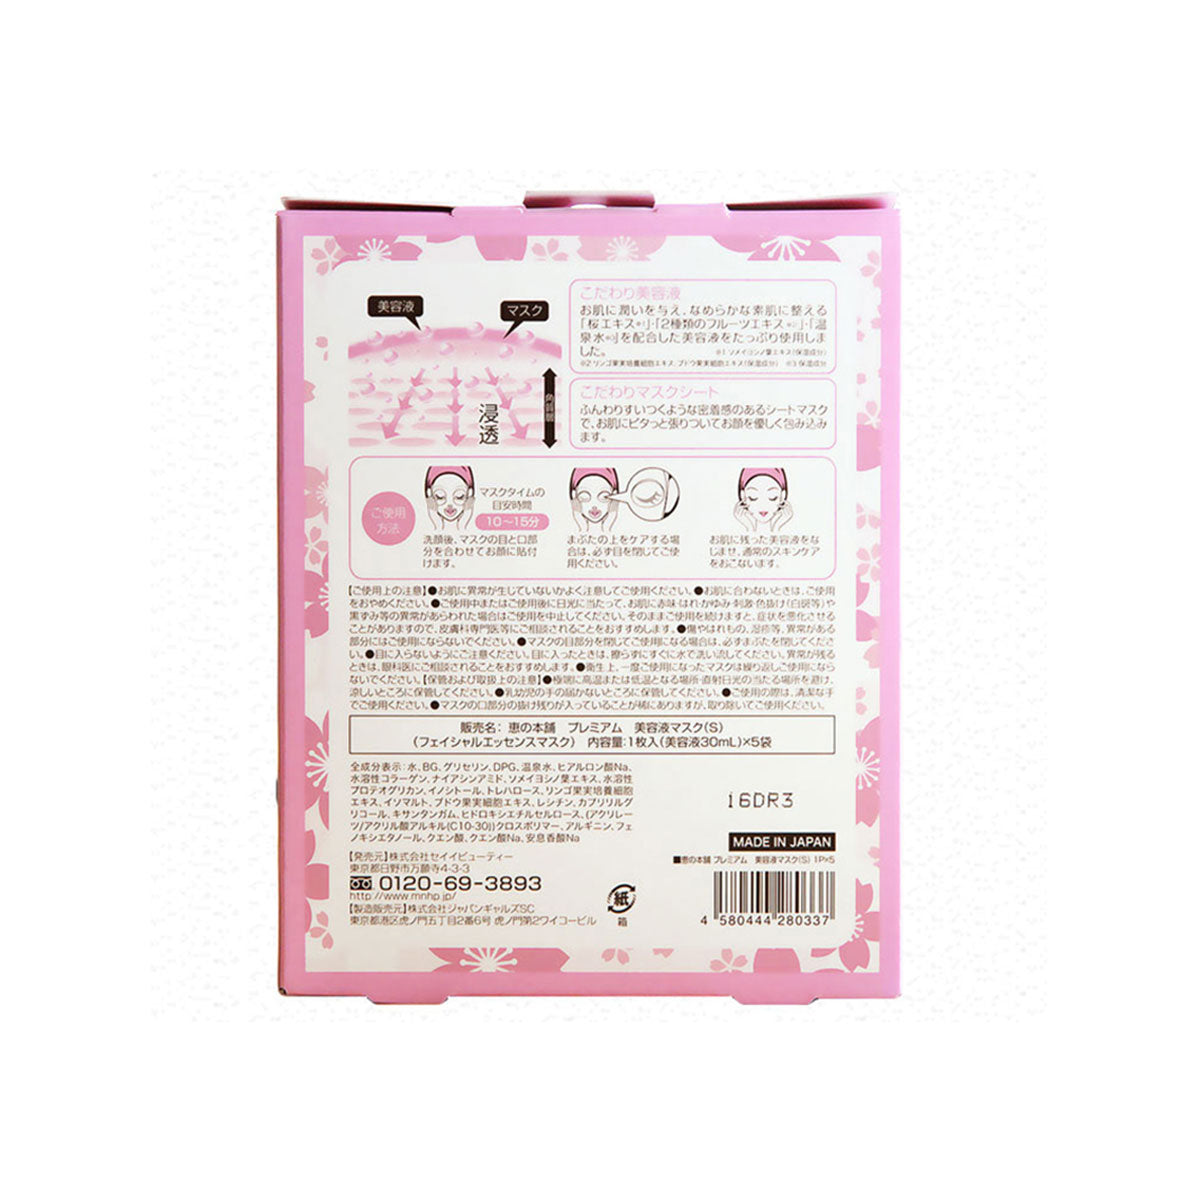 Enriching Mask Limited Cherry Blossom Edition 5pcs